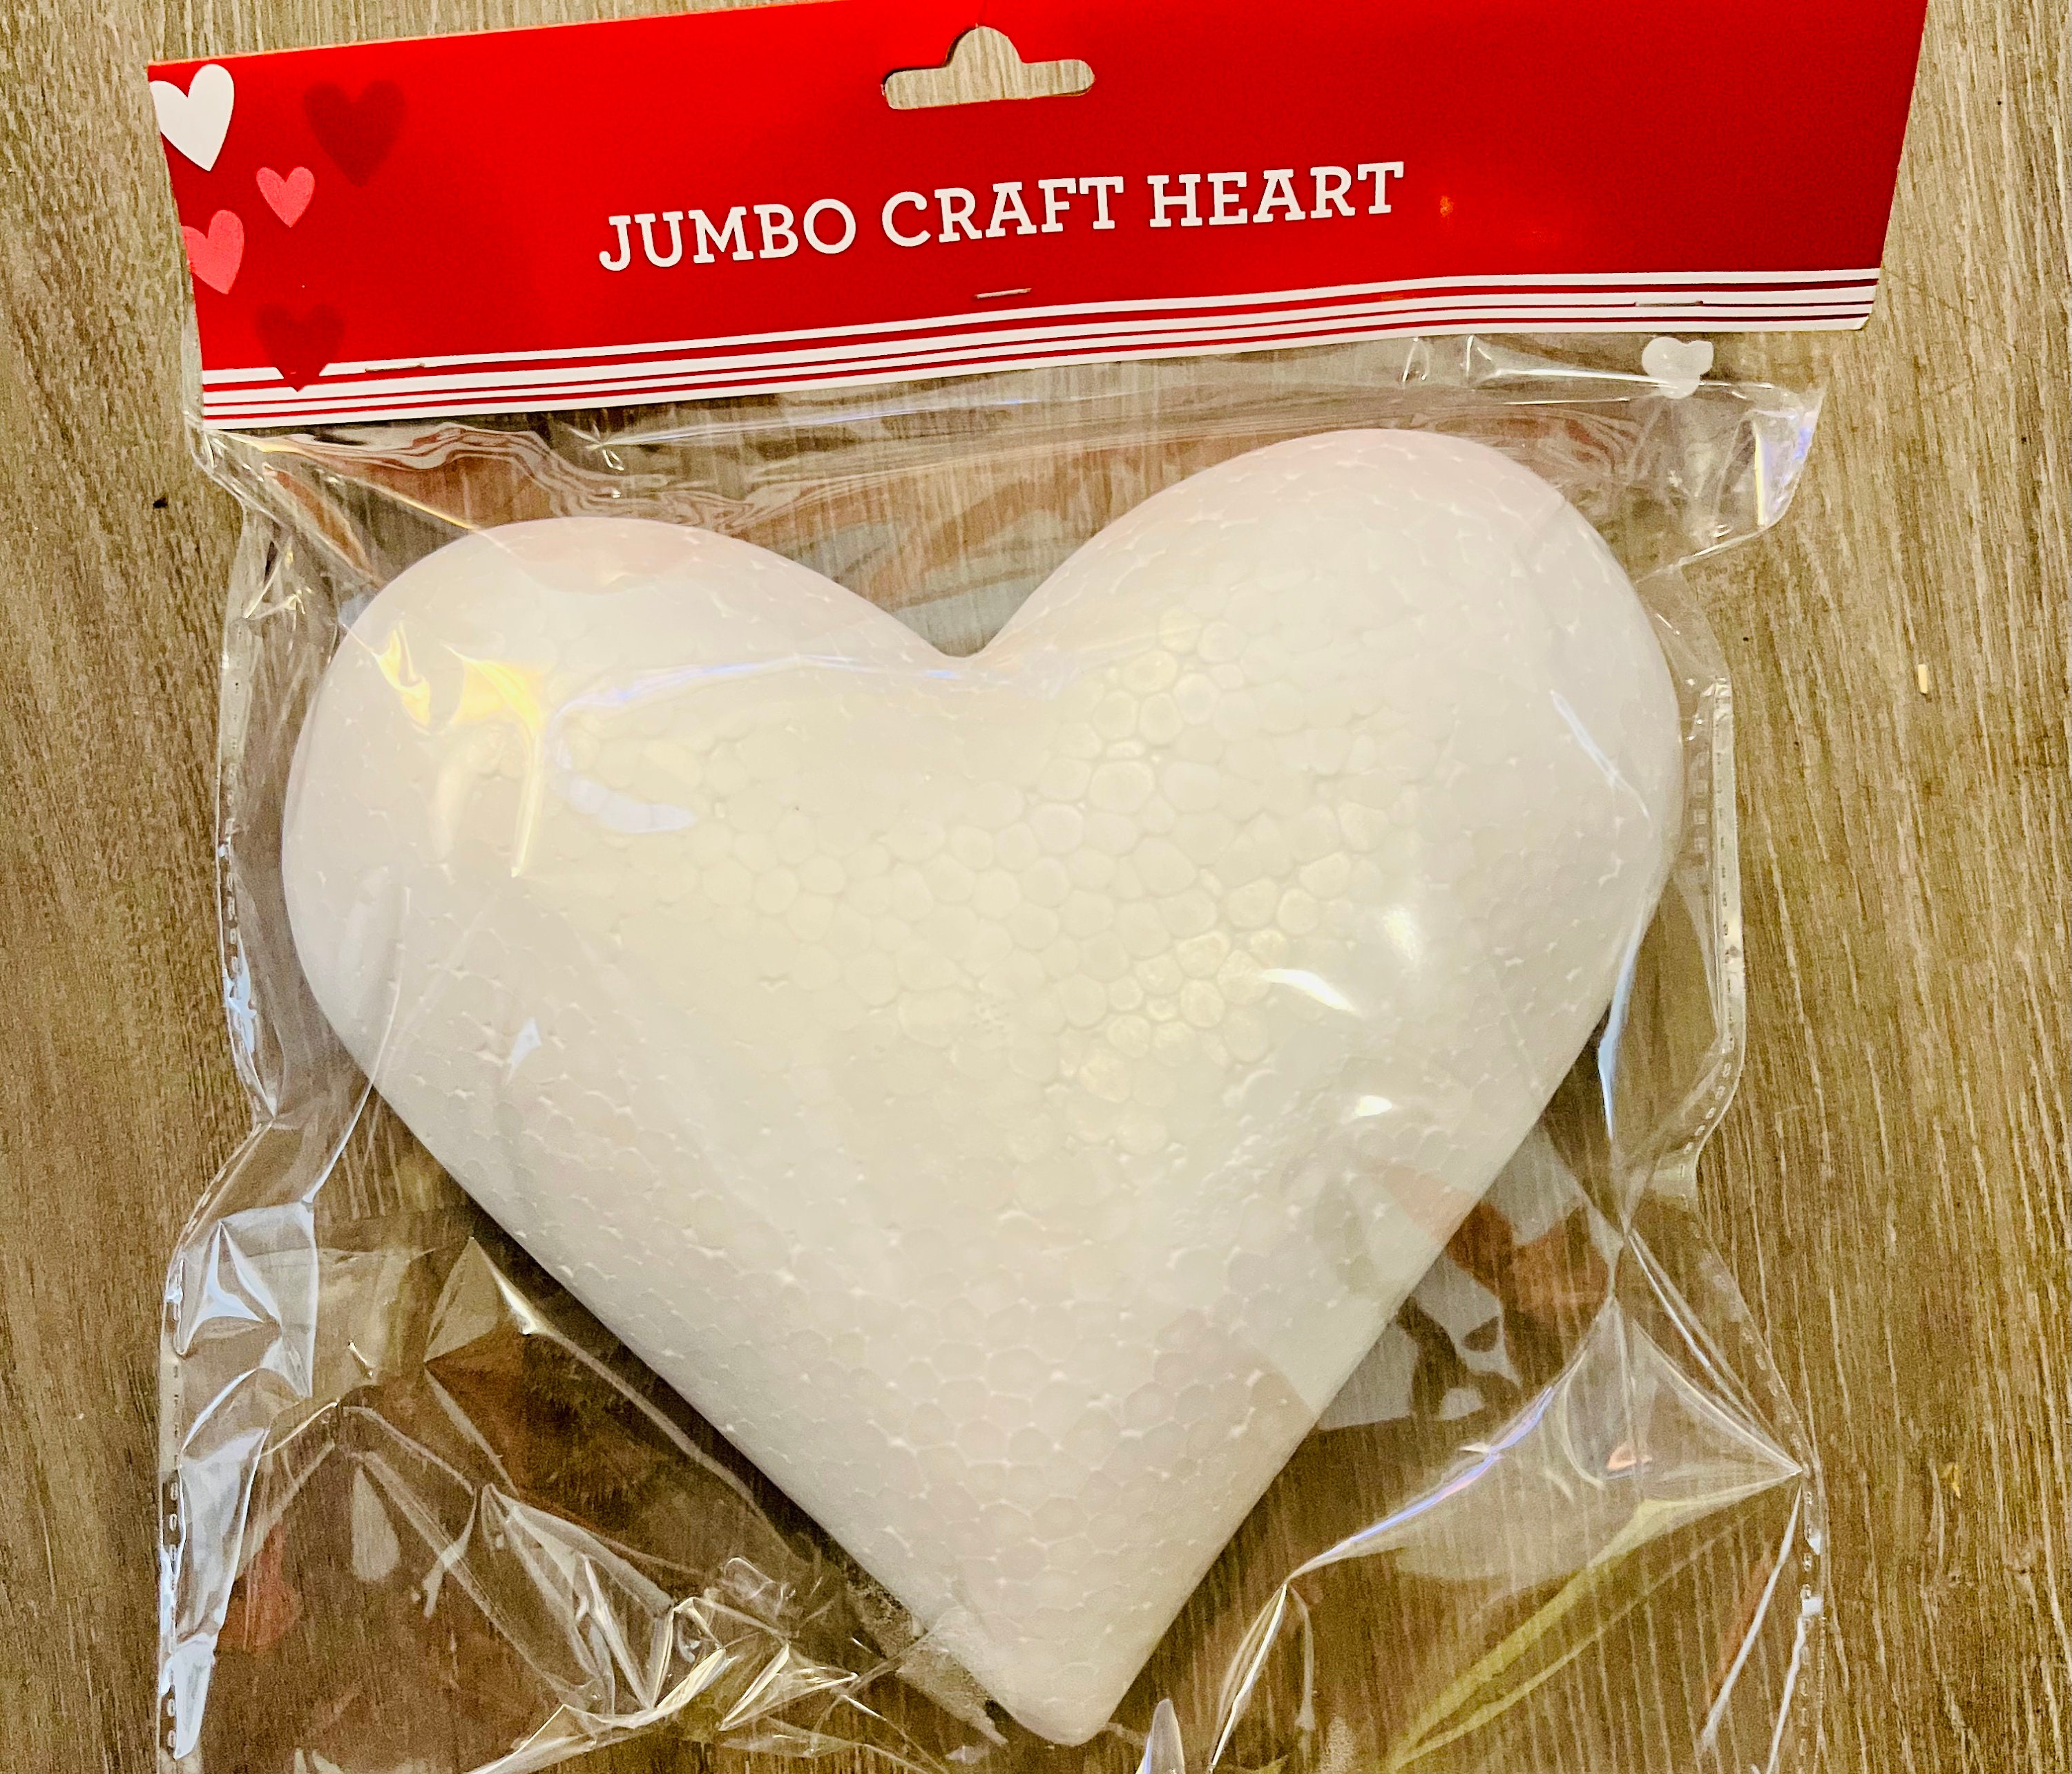 16 inch Styrofoam Heart